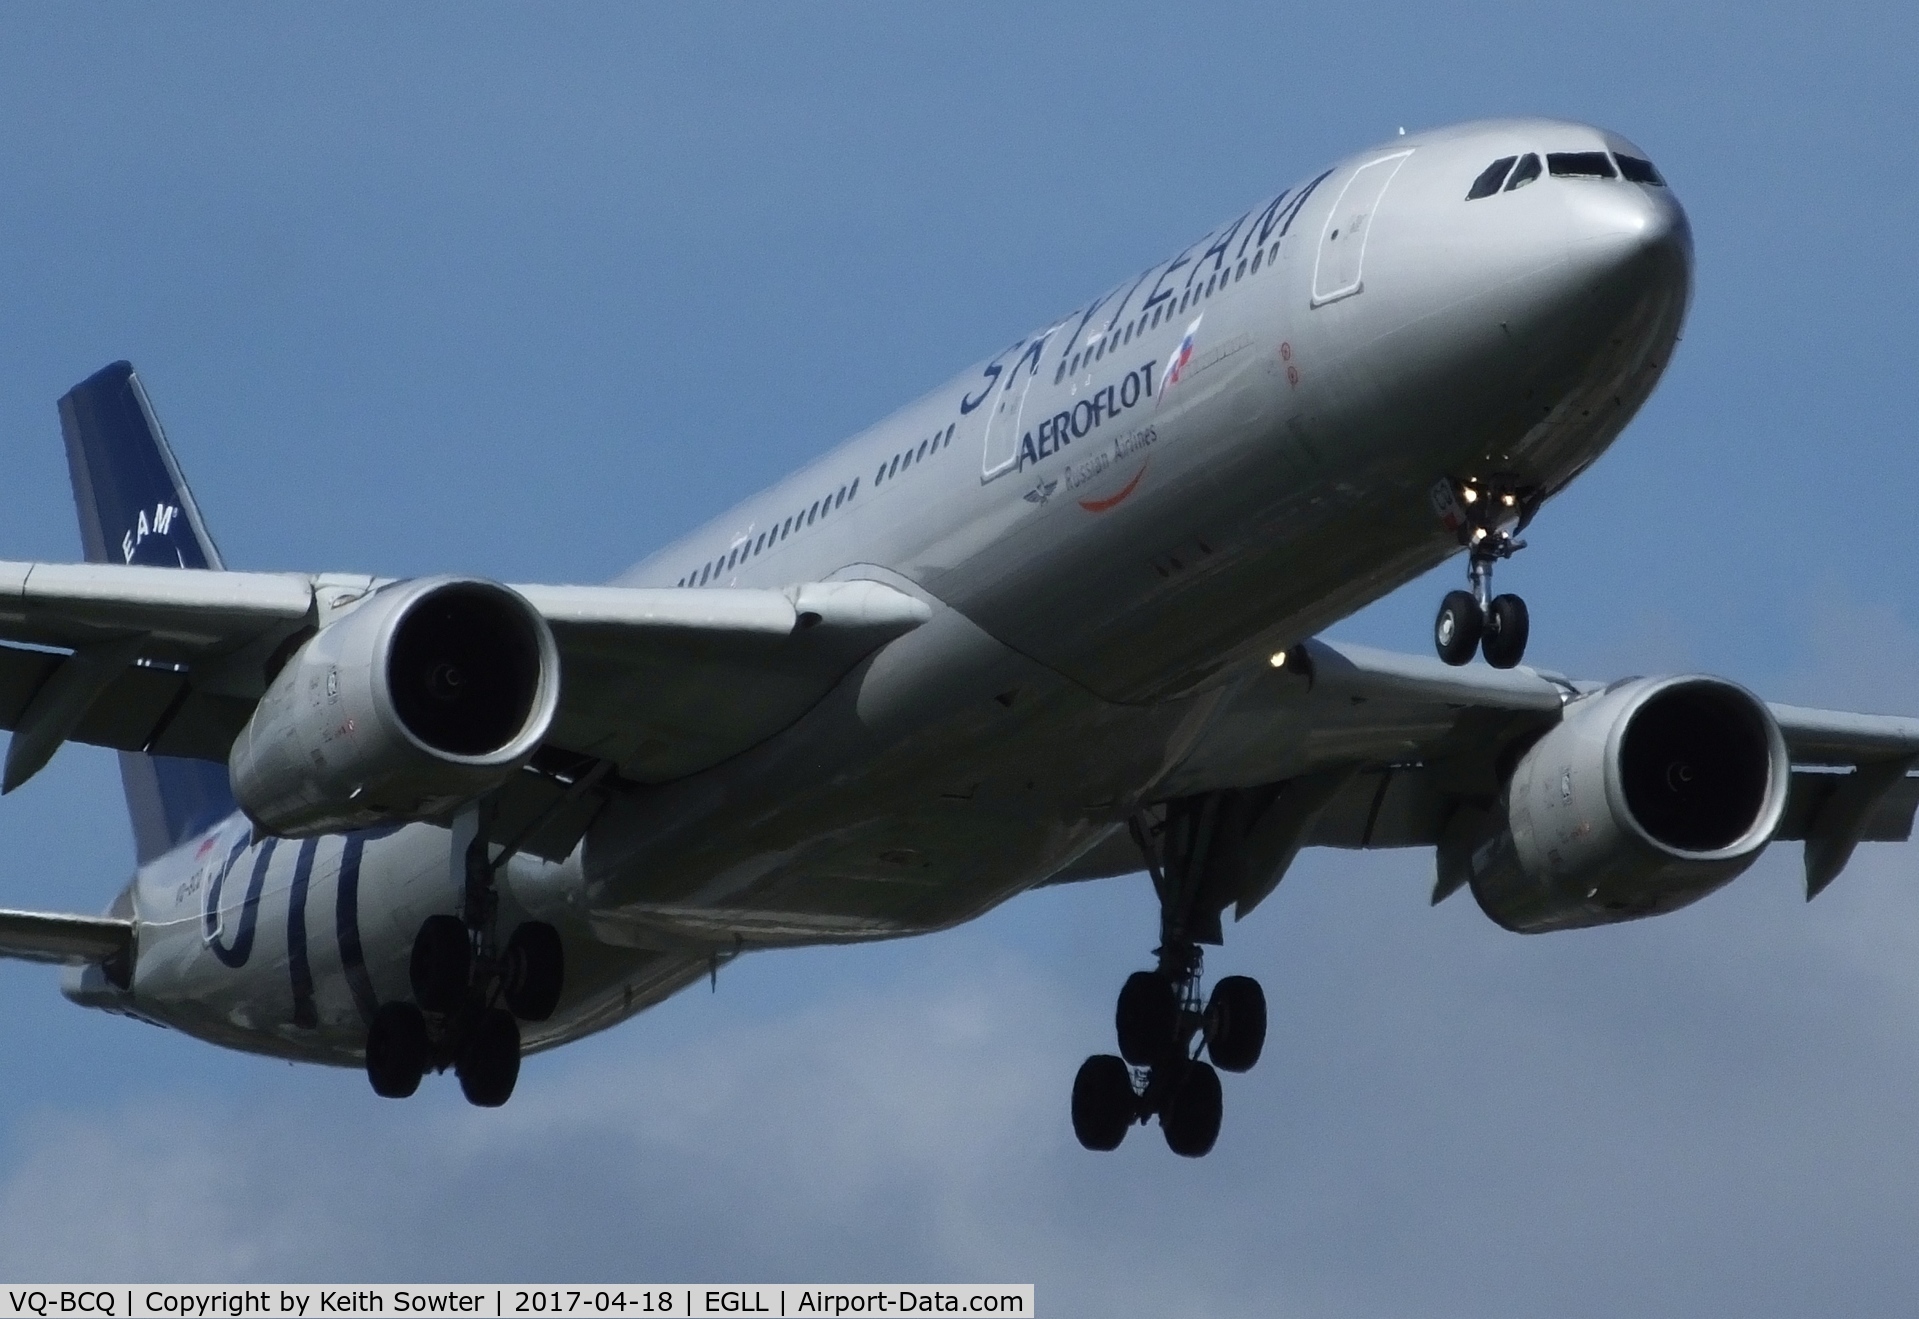 VQ-BCQ, 2009 Airbus A330-343E C/N 1058, Short finals to land on runway 09L at Heathrow